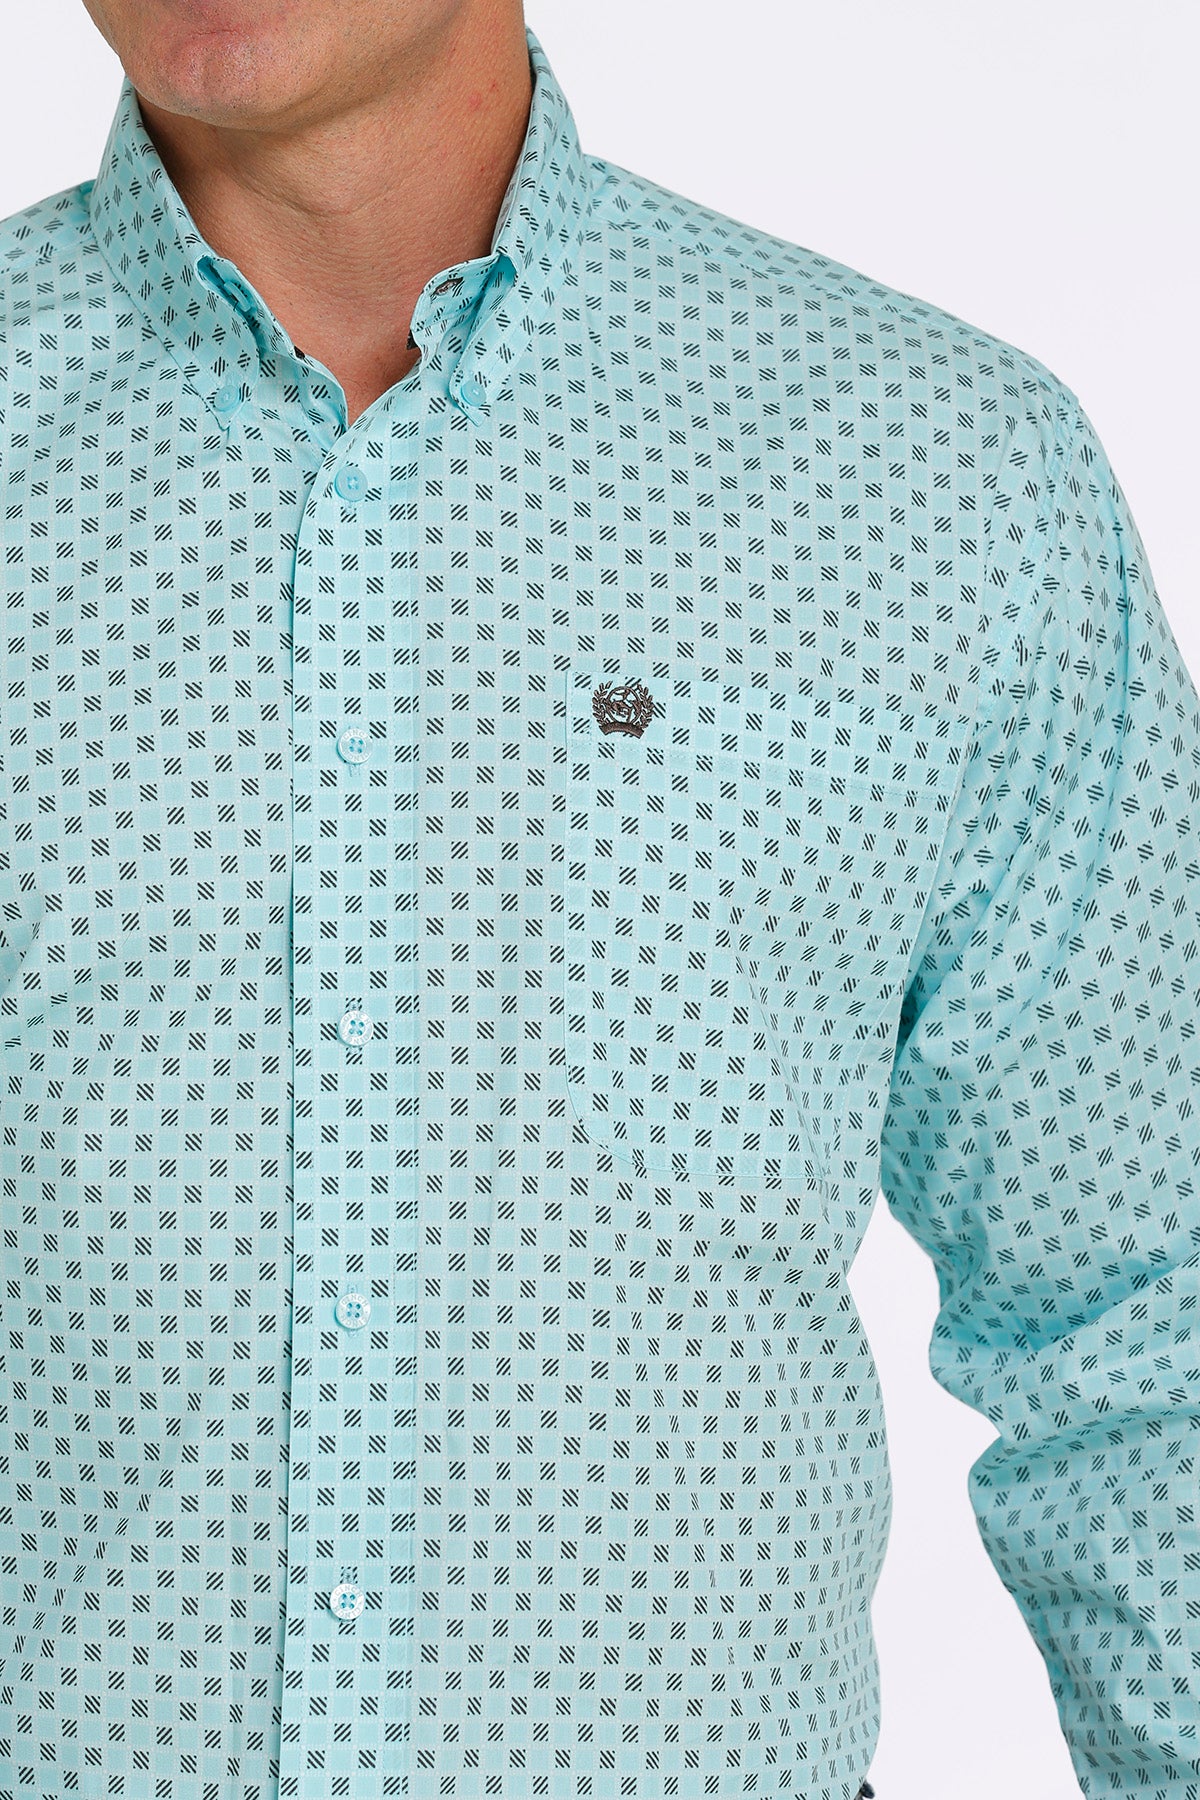 CINCH Men's Aqua and Brown Square Print Button-Down Western Shirt